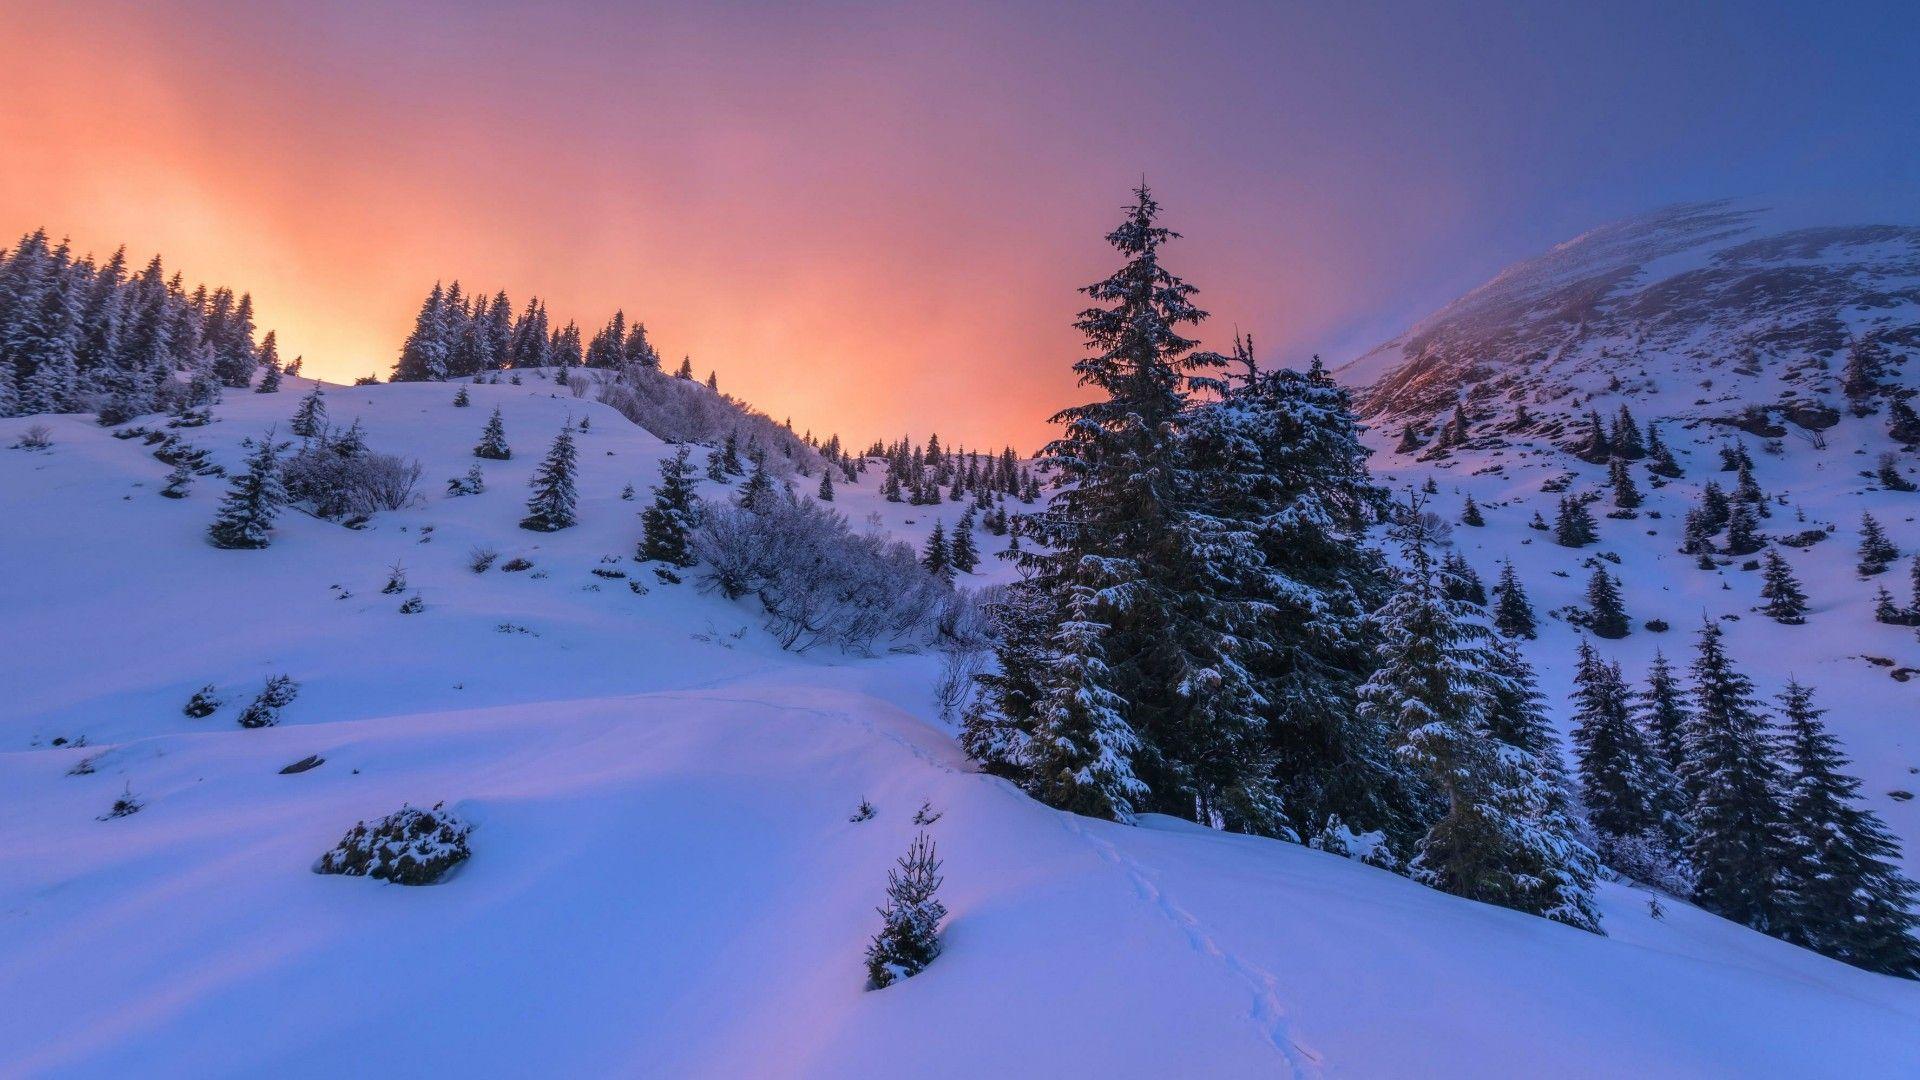 Winter Mountains In The Sunset Wallpaper. Wallpaper Studio 10